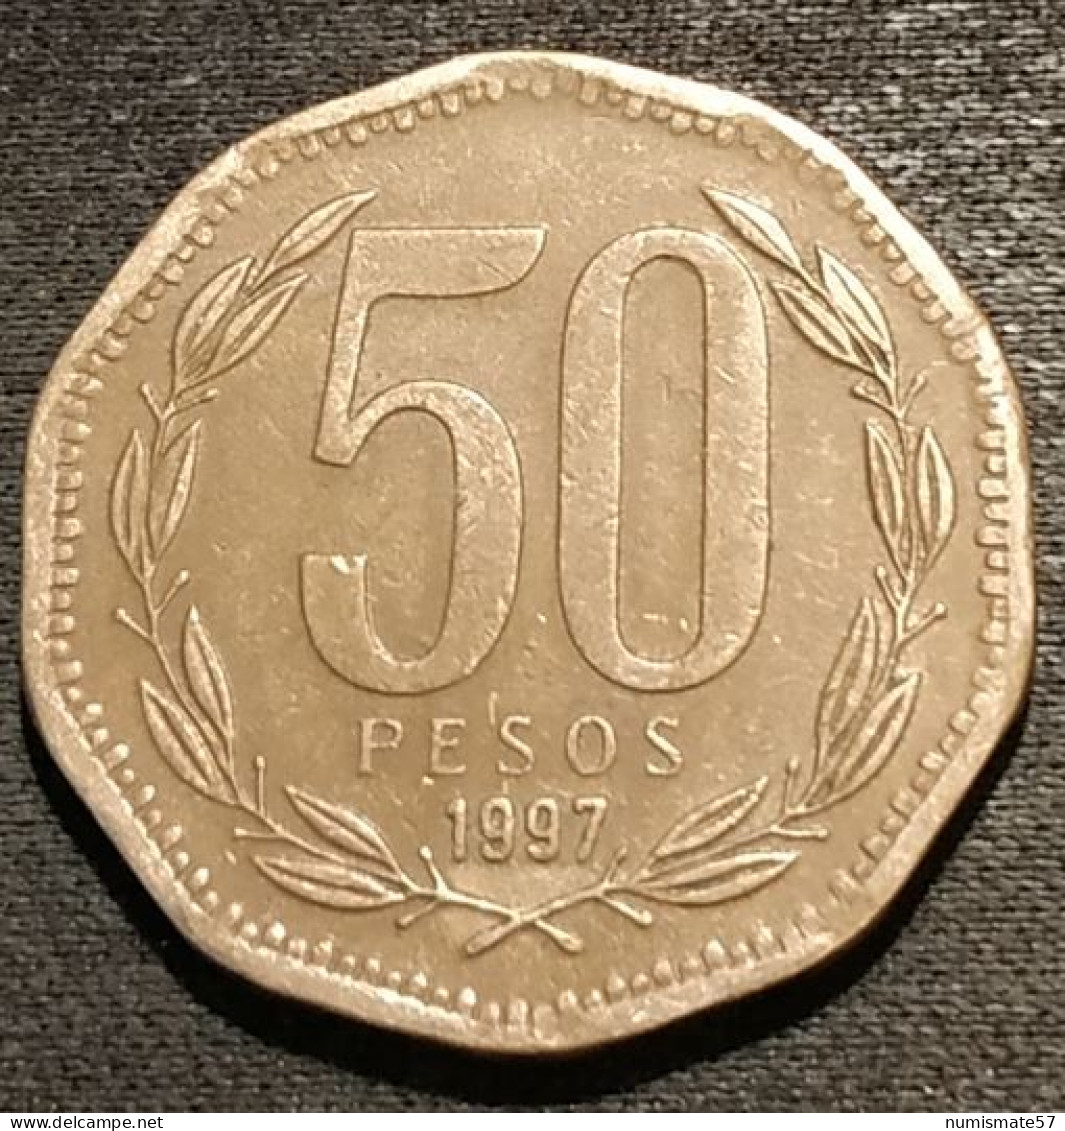 CHILI - CHILE - 50 PESOS 1997 - Bernardo O'Higgins Riquelme - KM 219.2 - ( Bronze-aluminium ) - Cile